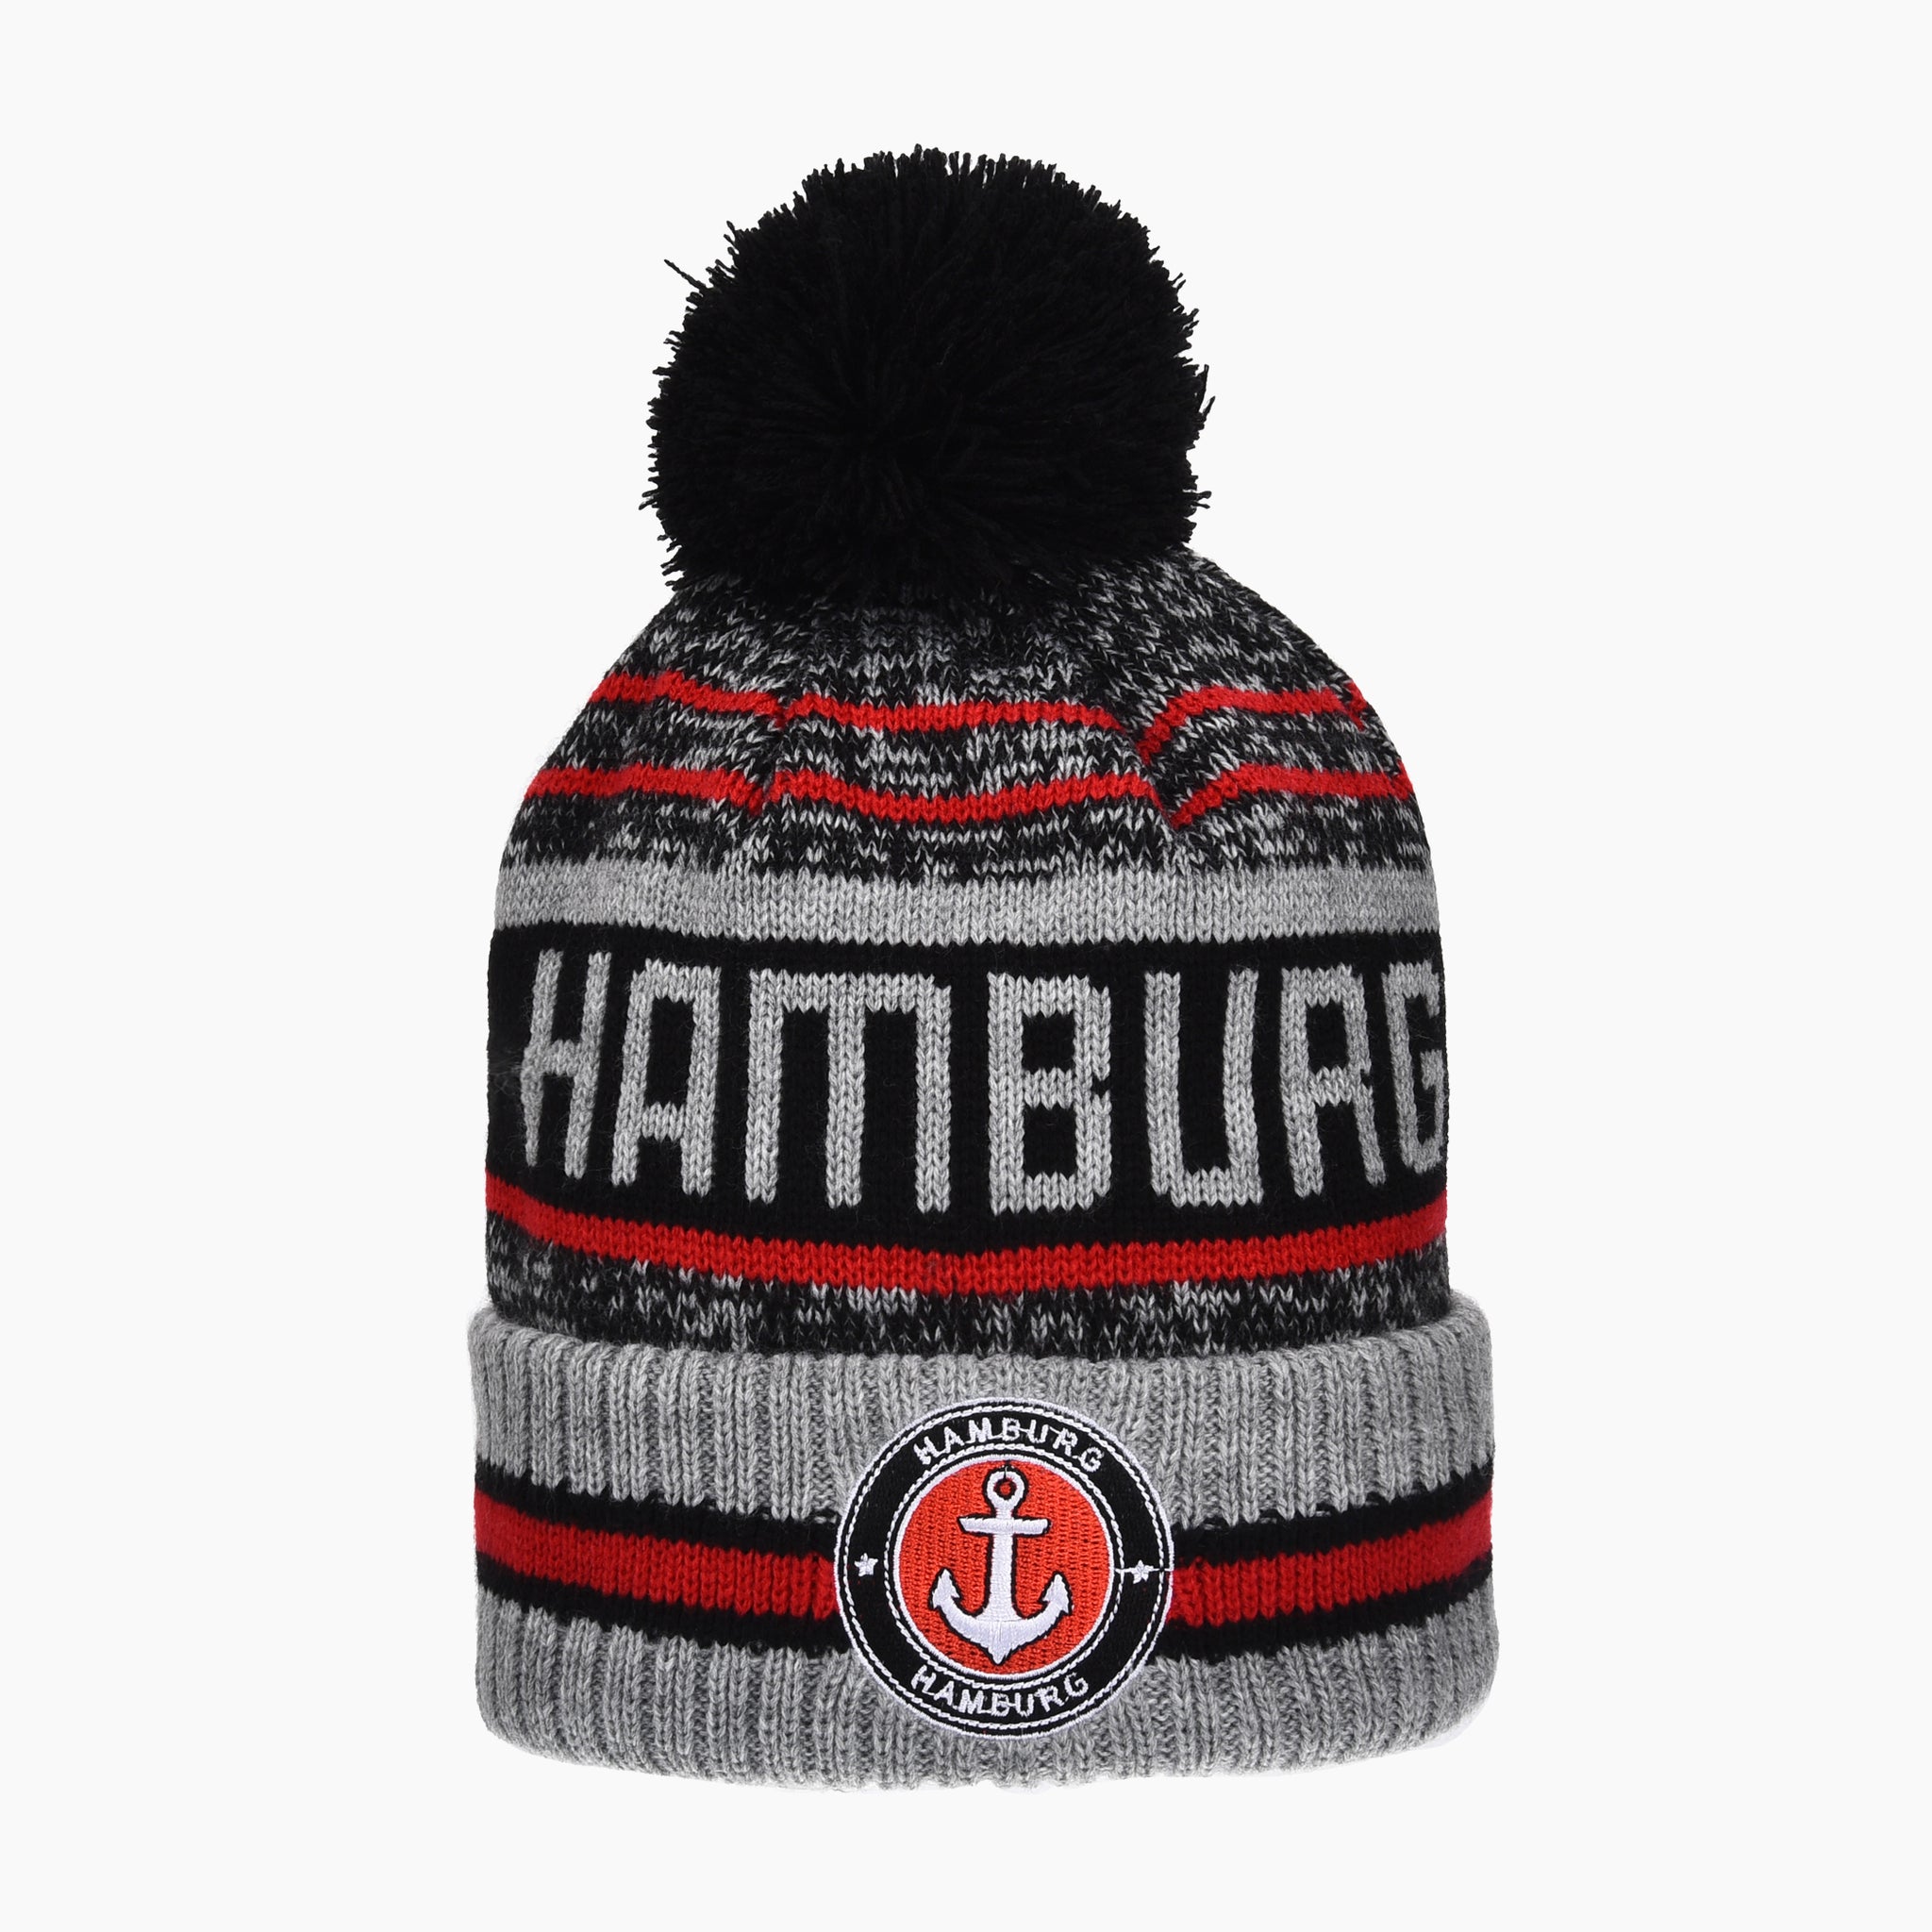 Hamburg Winter Hat with Pompon - Robin Ruth